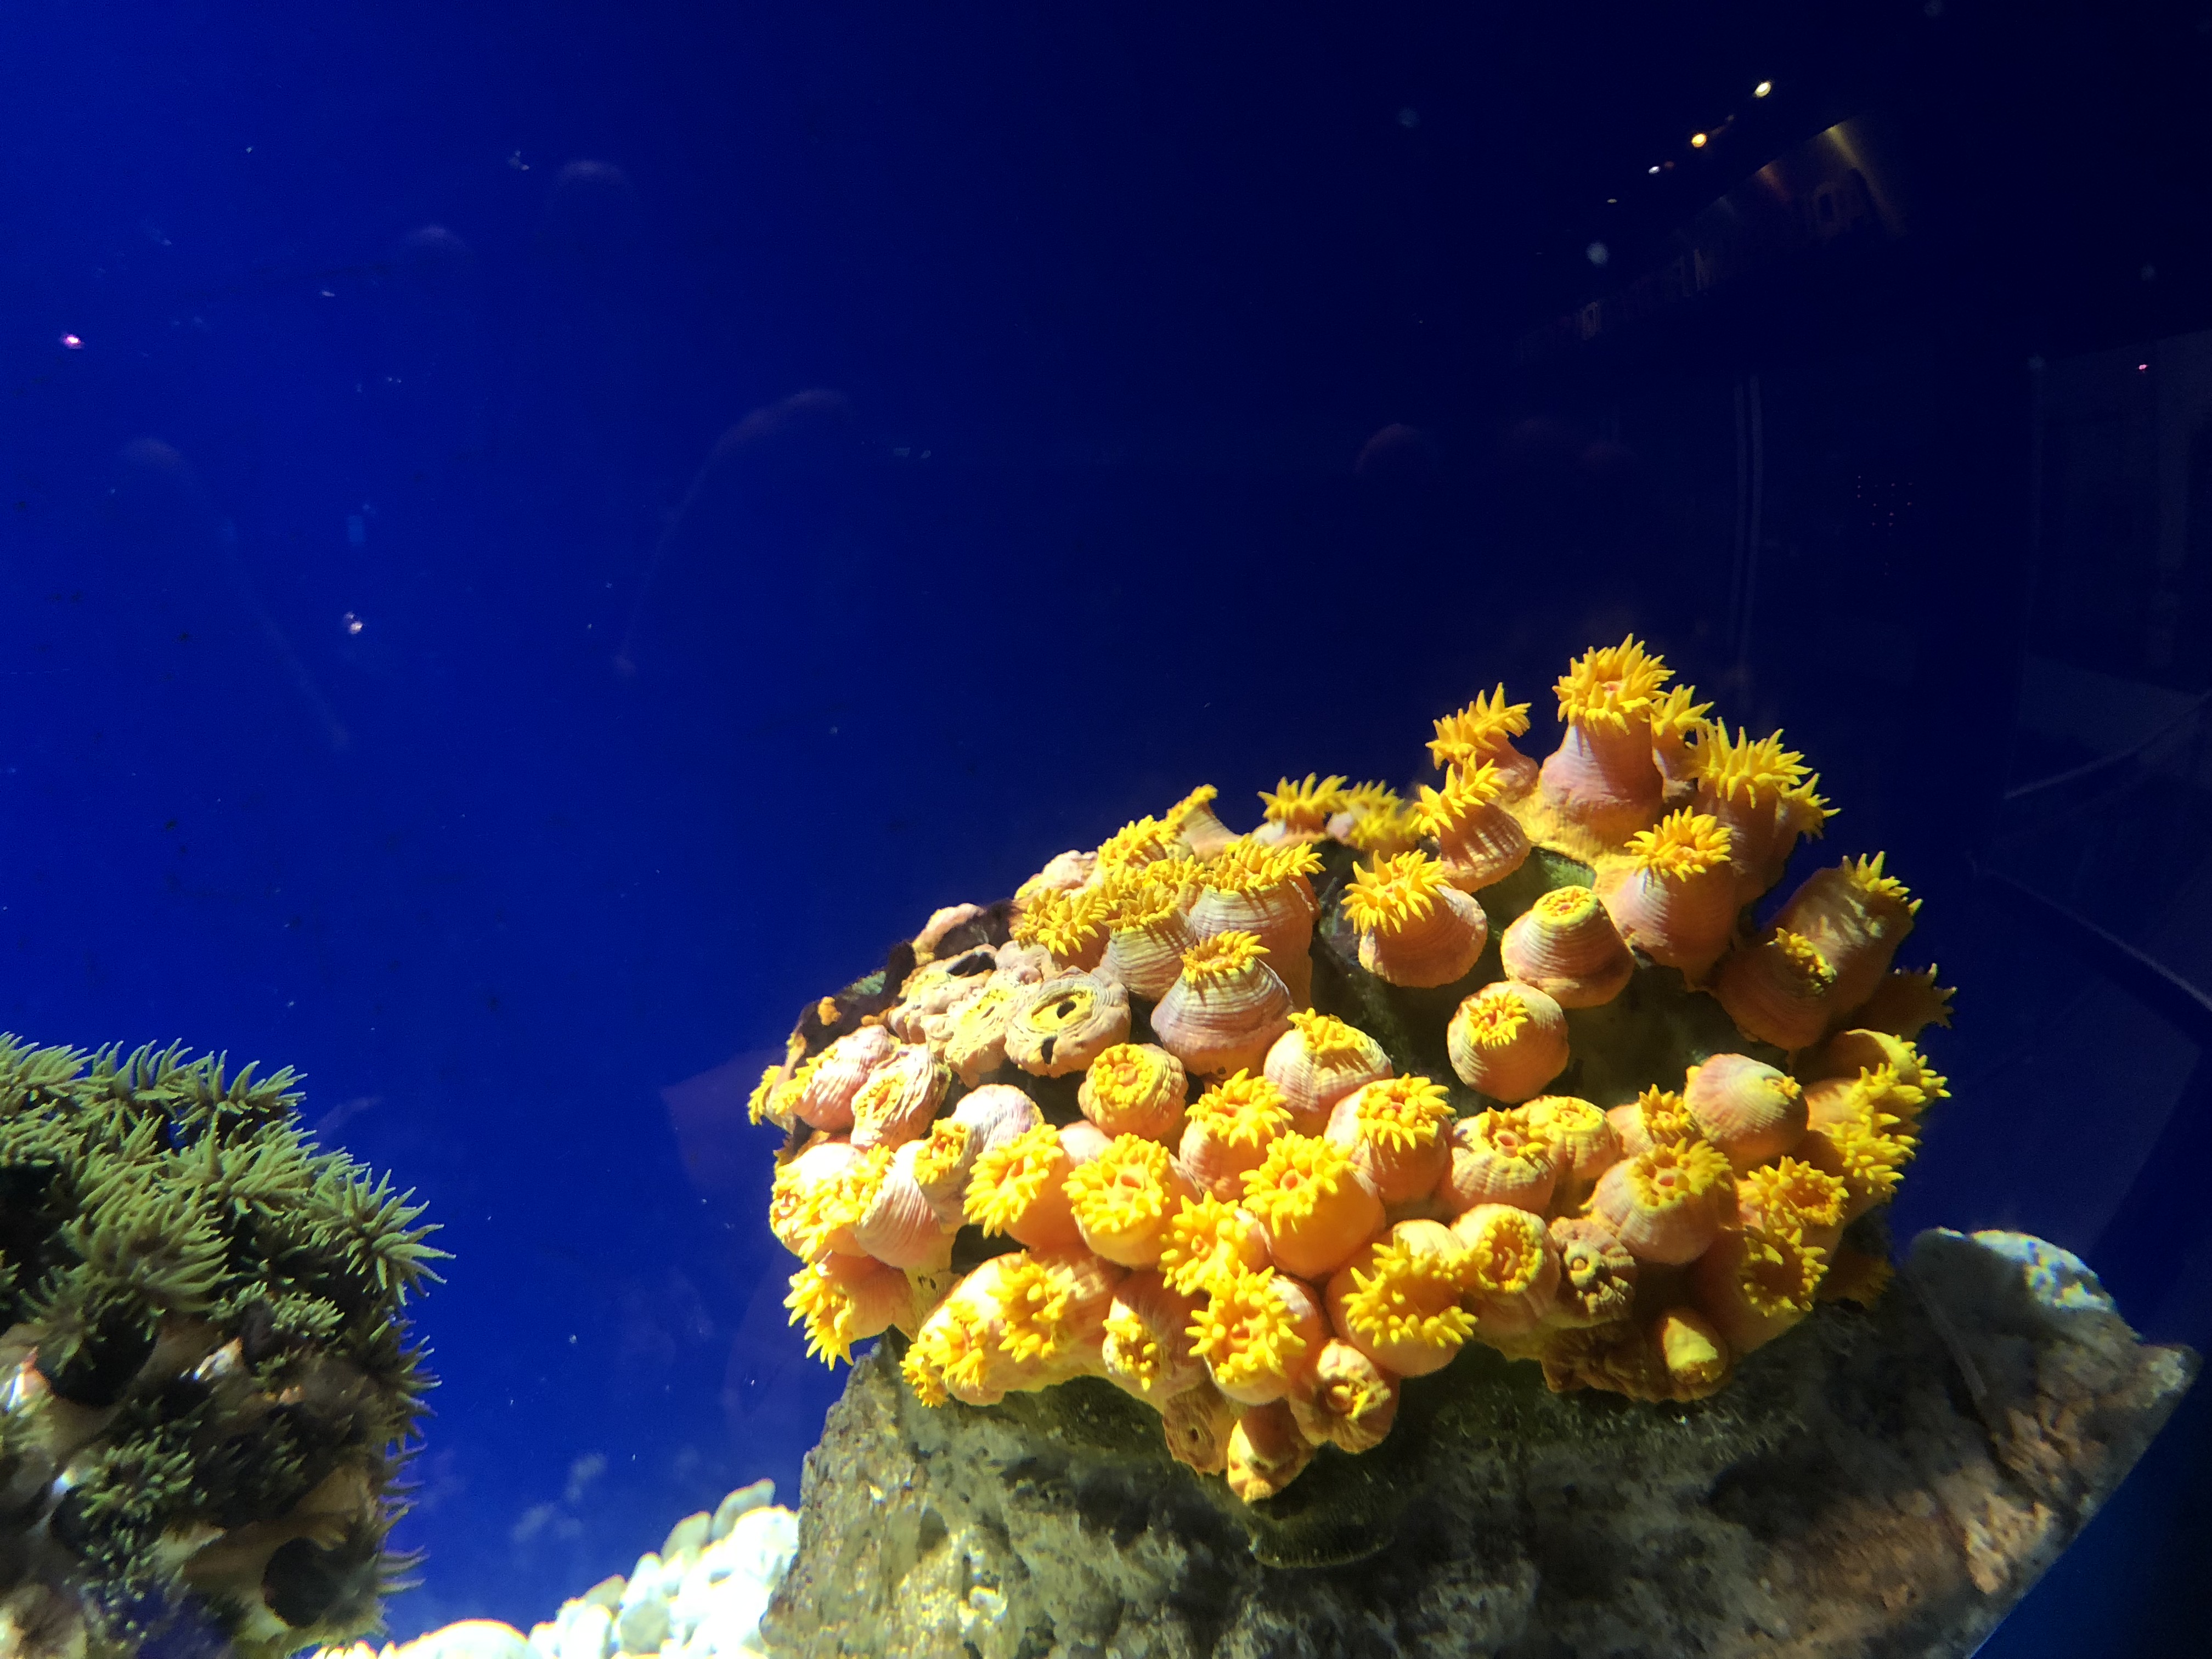 Coral reef - Ripley's Aquarium in Gatlinburg, TN